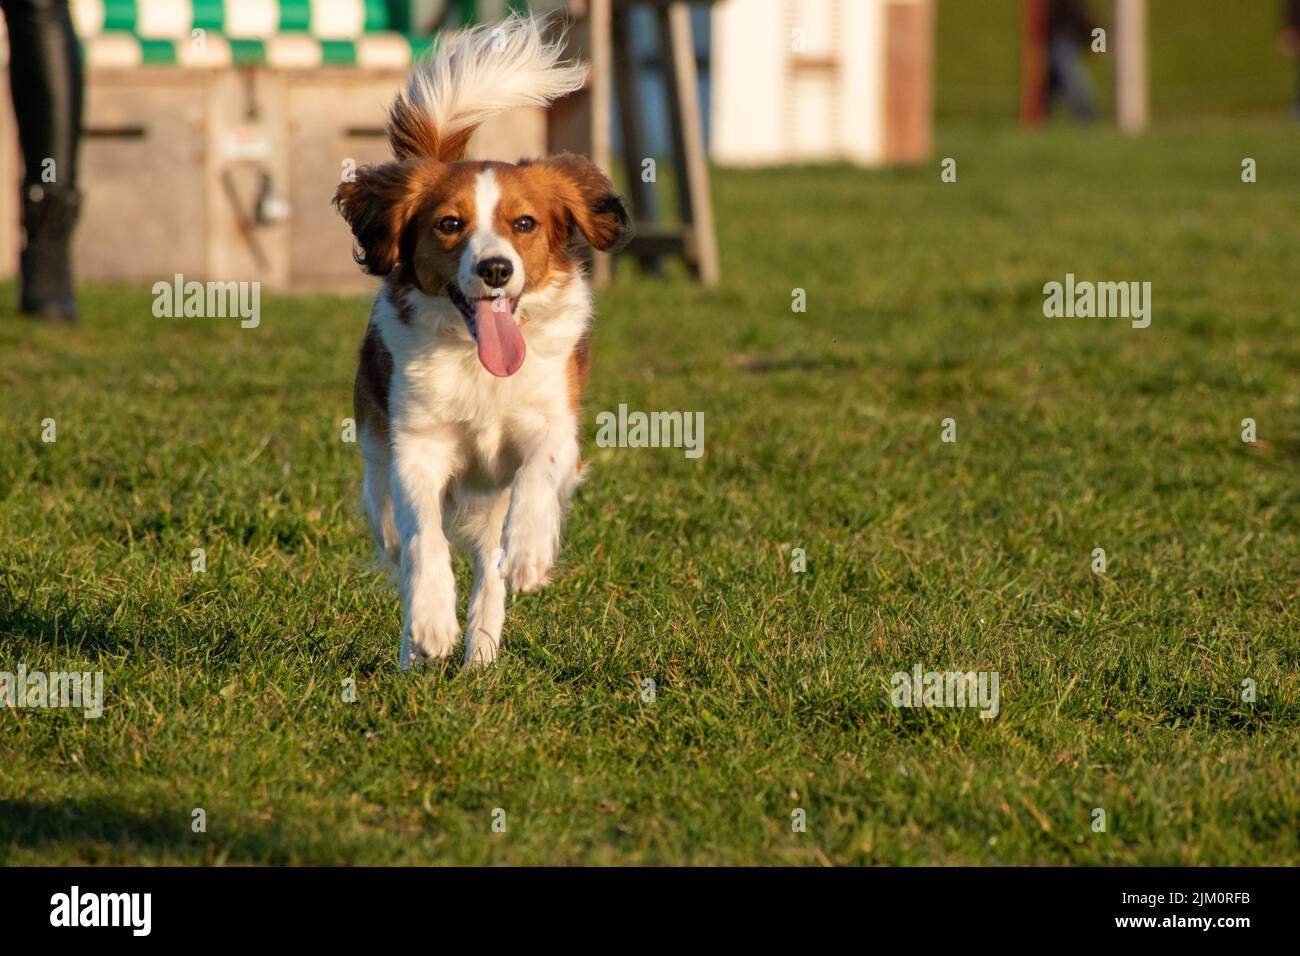 A closeup of a cute Dutch Kooikerhondje dog running on lush green grass with its tongue out Stock Photo